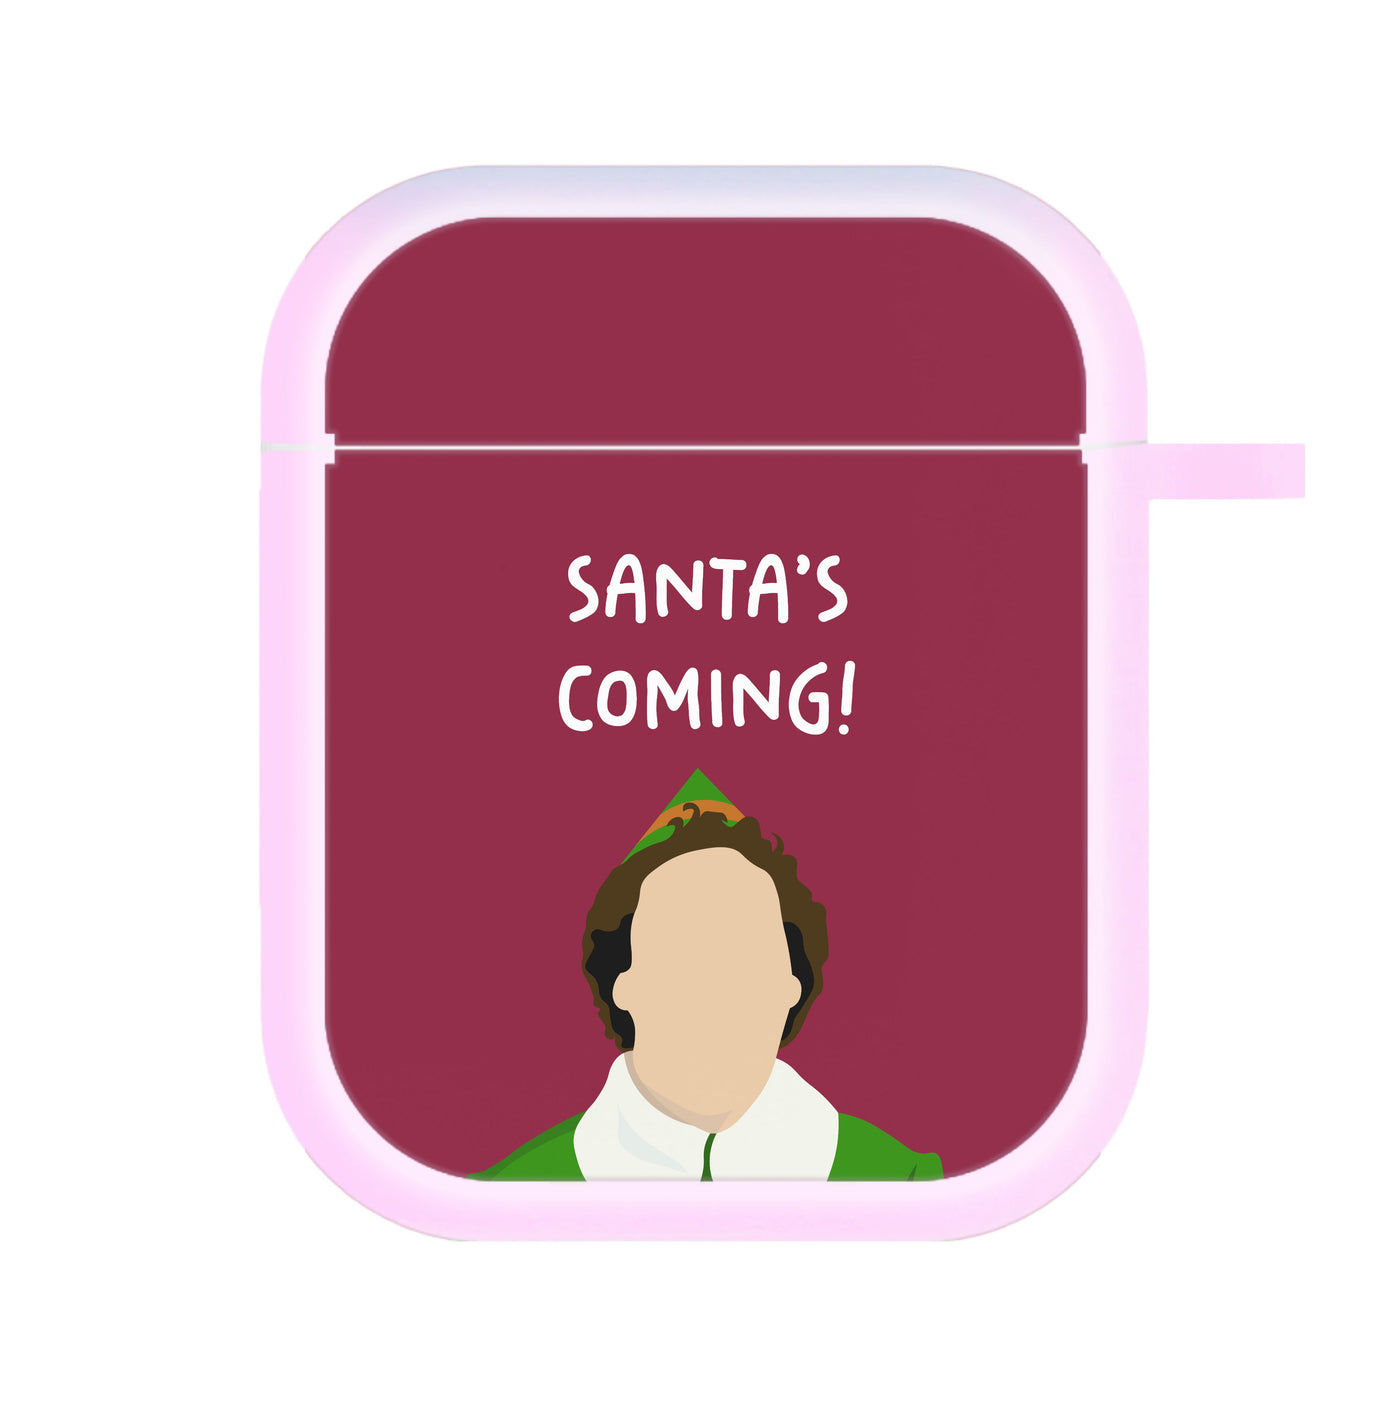 Santa's Coming! - Elf AirPods Case